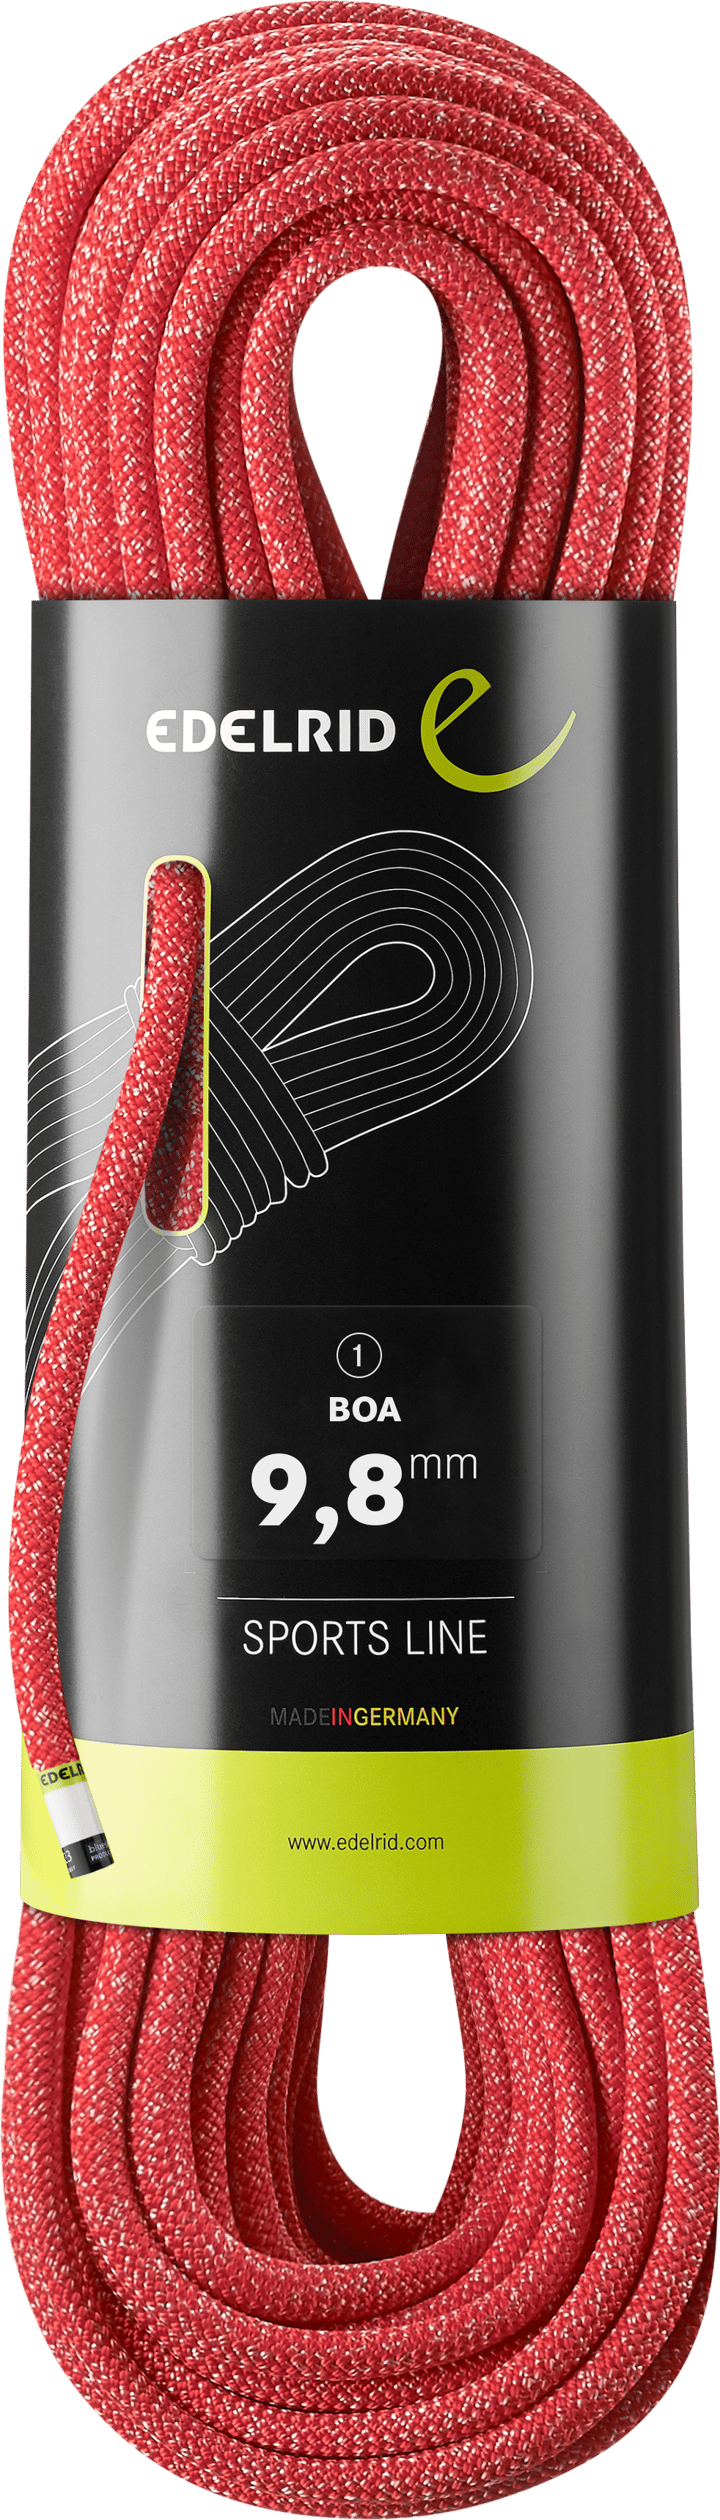 Edelrid Boa 9,8mm 40m Climbing Rope - Single Rope - Climbing Ropes